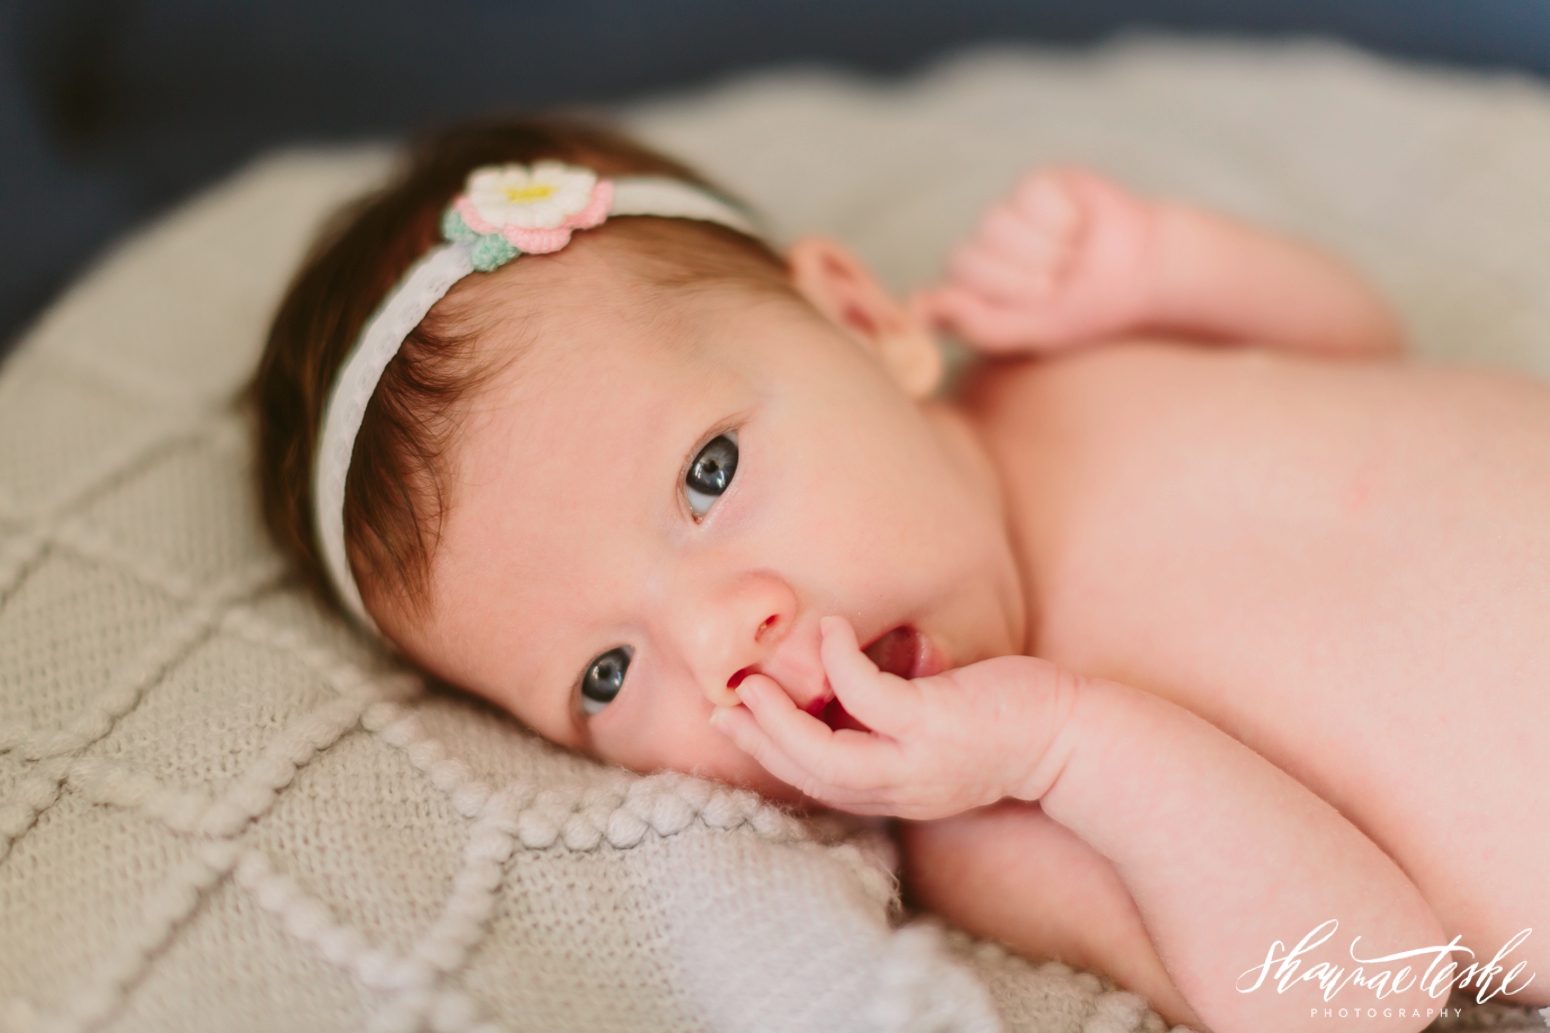 shaunae_teske_wisconsin_photographer_at-home-newborn-session-wisconsin-kathryn-40